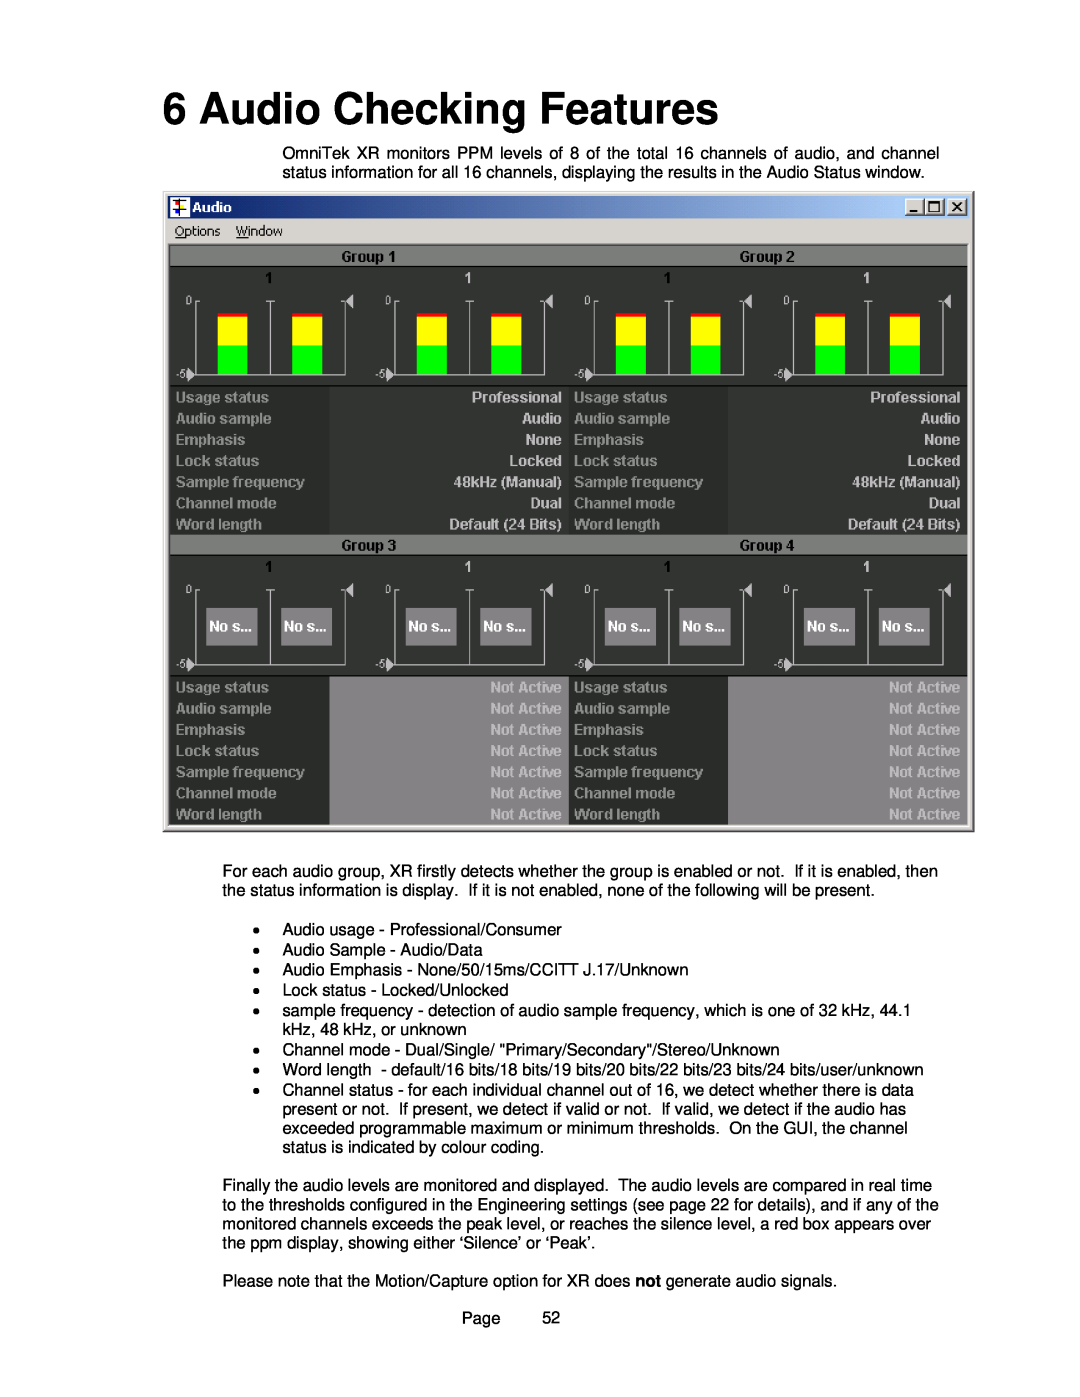 OmniTek OmniTek XR manual Audio Checking Features 